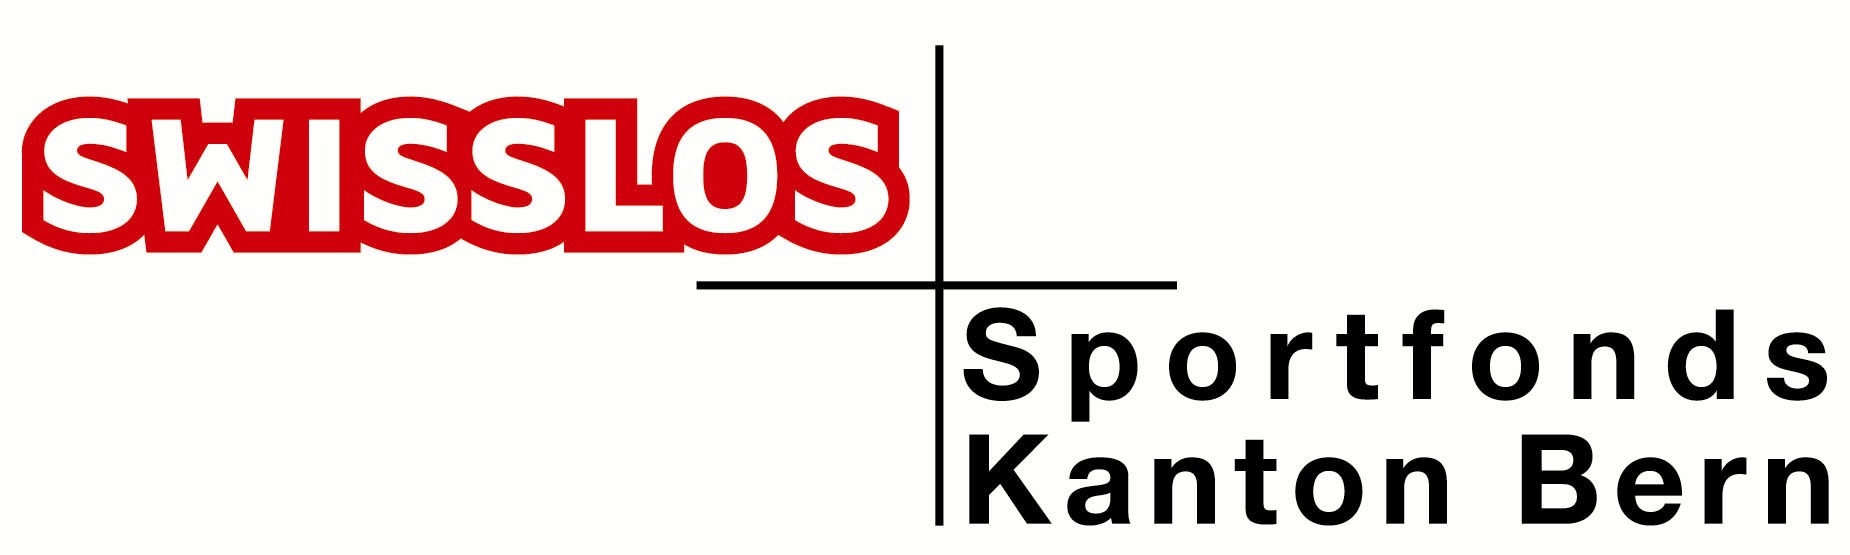 Sportfonds Kanton Bern : 